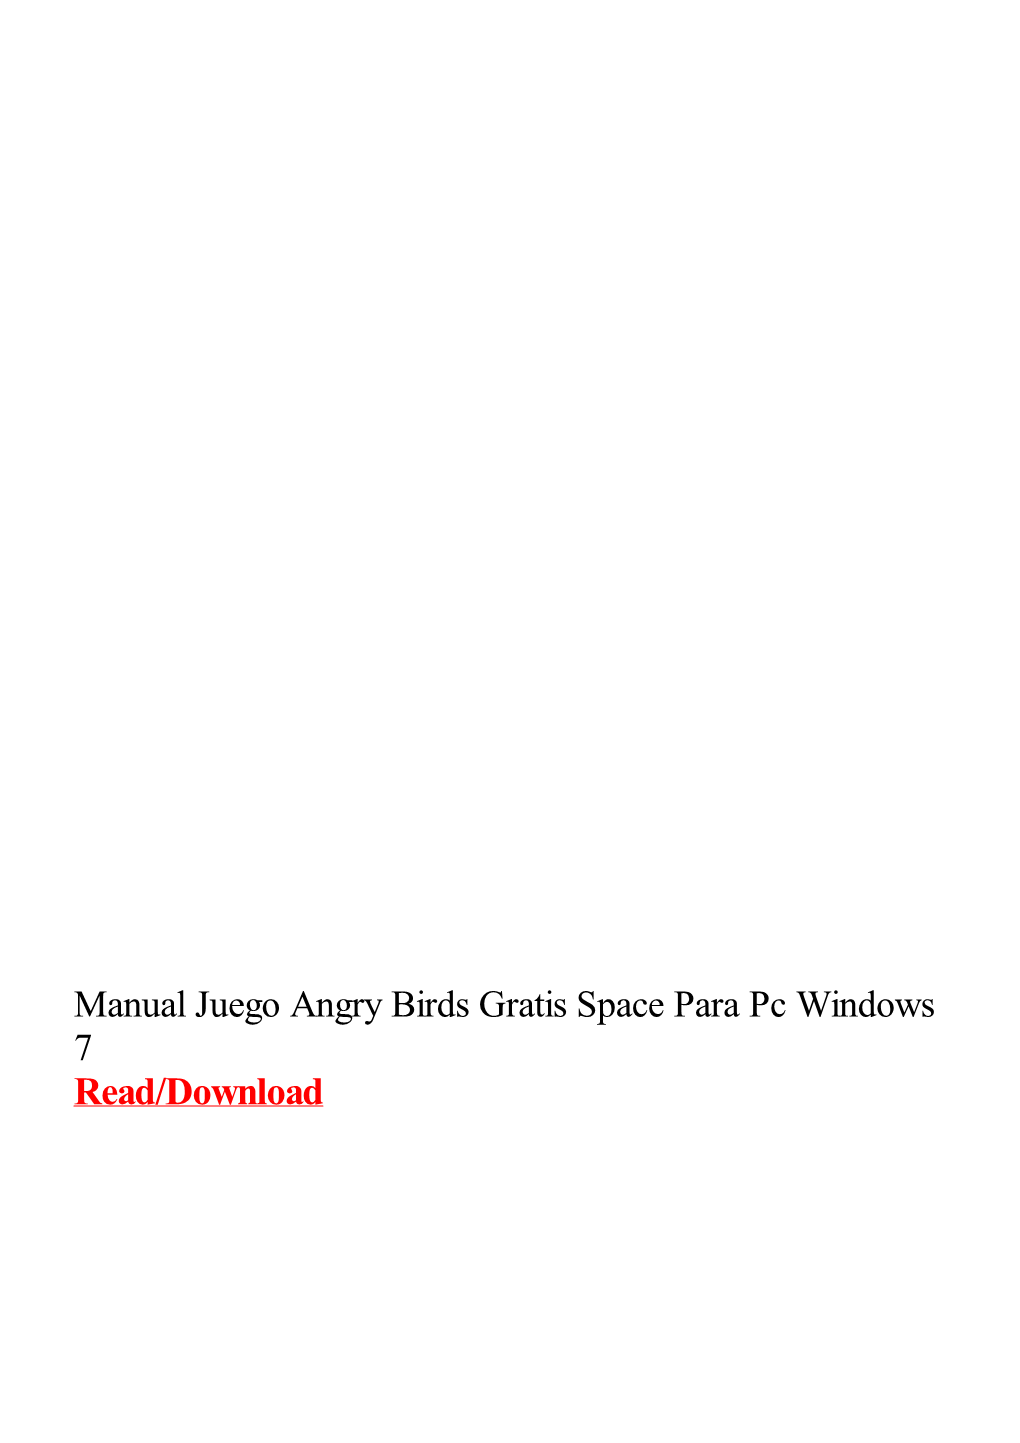 Manual Juego Angry Birds Gratis Space Para Pc Windows 7